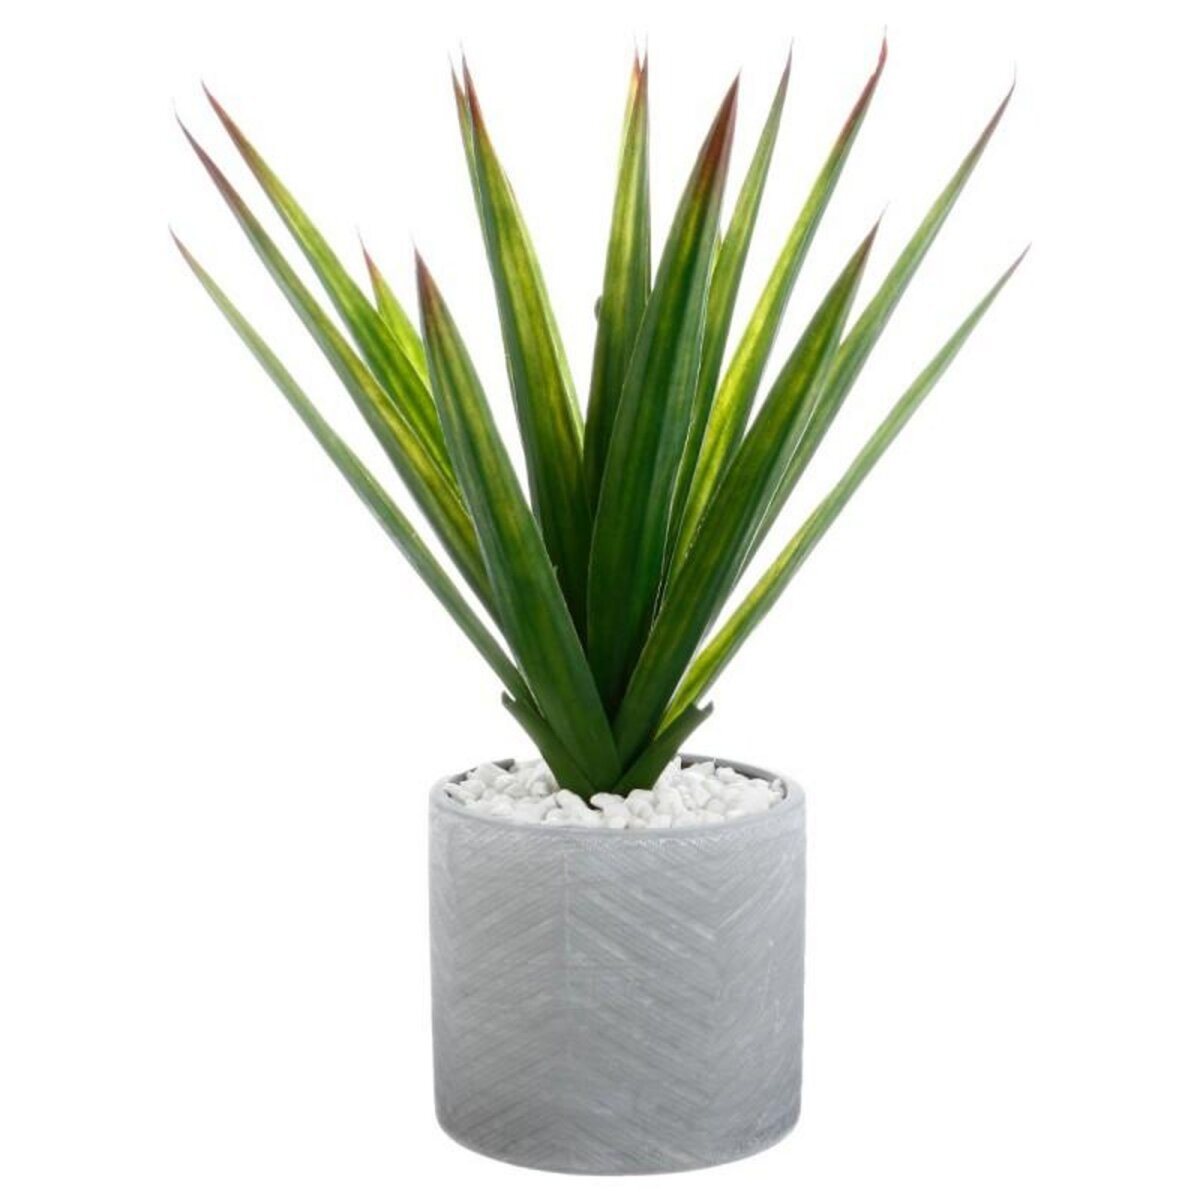  Plante Artificielle en Pot  Aloe Vera  47cm Vert